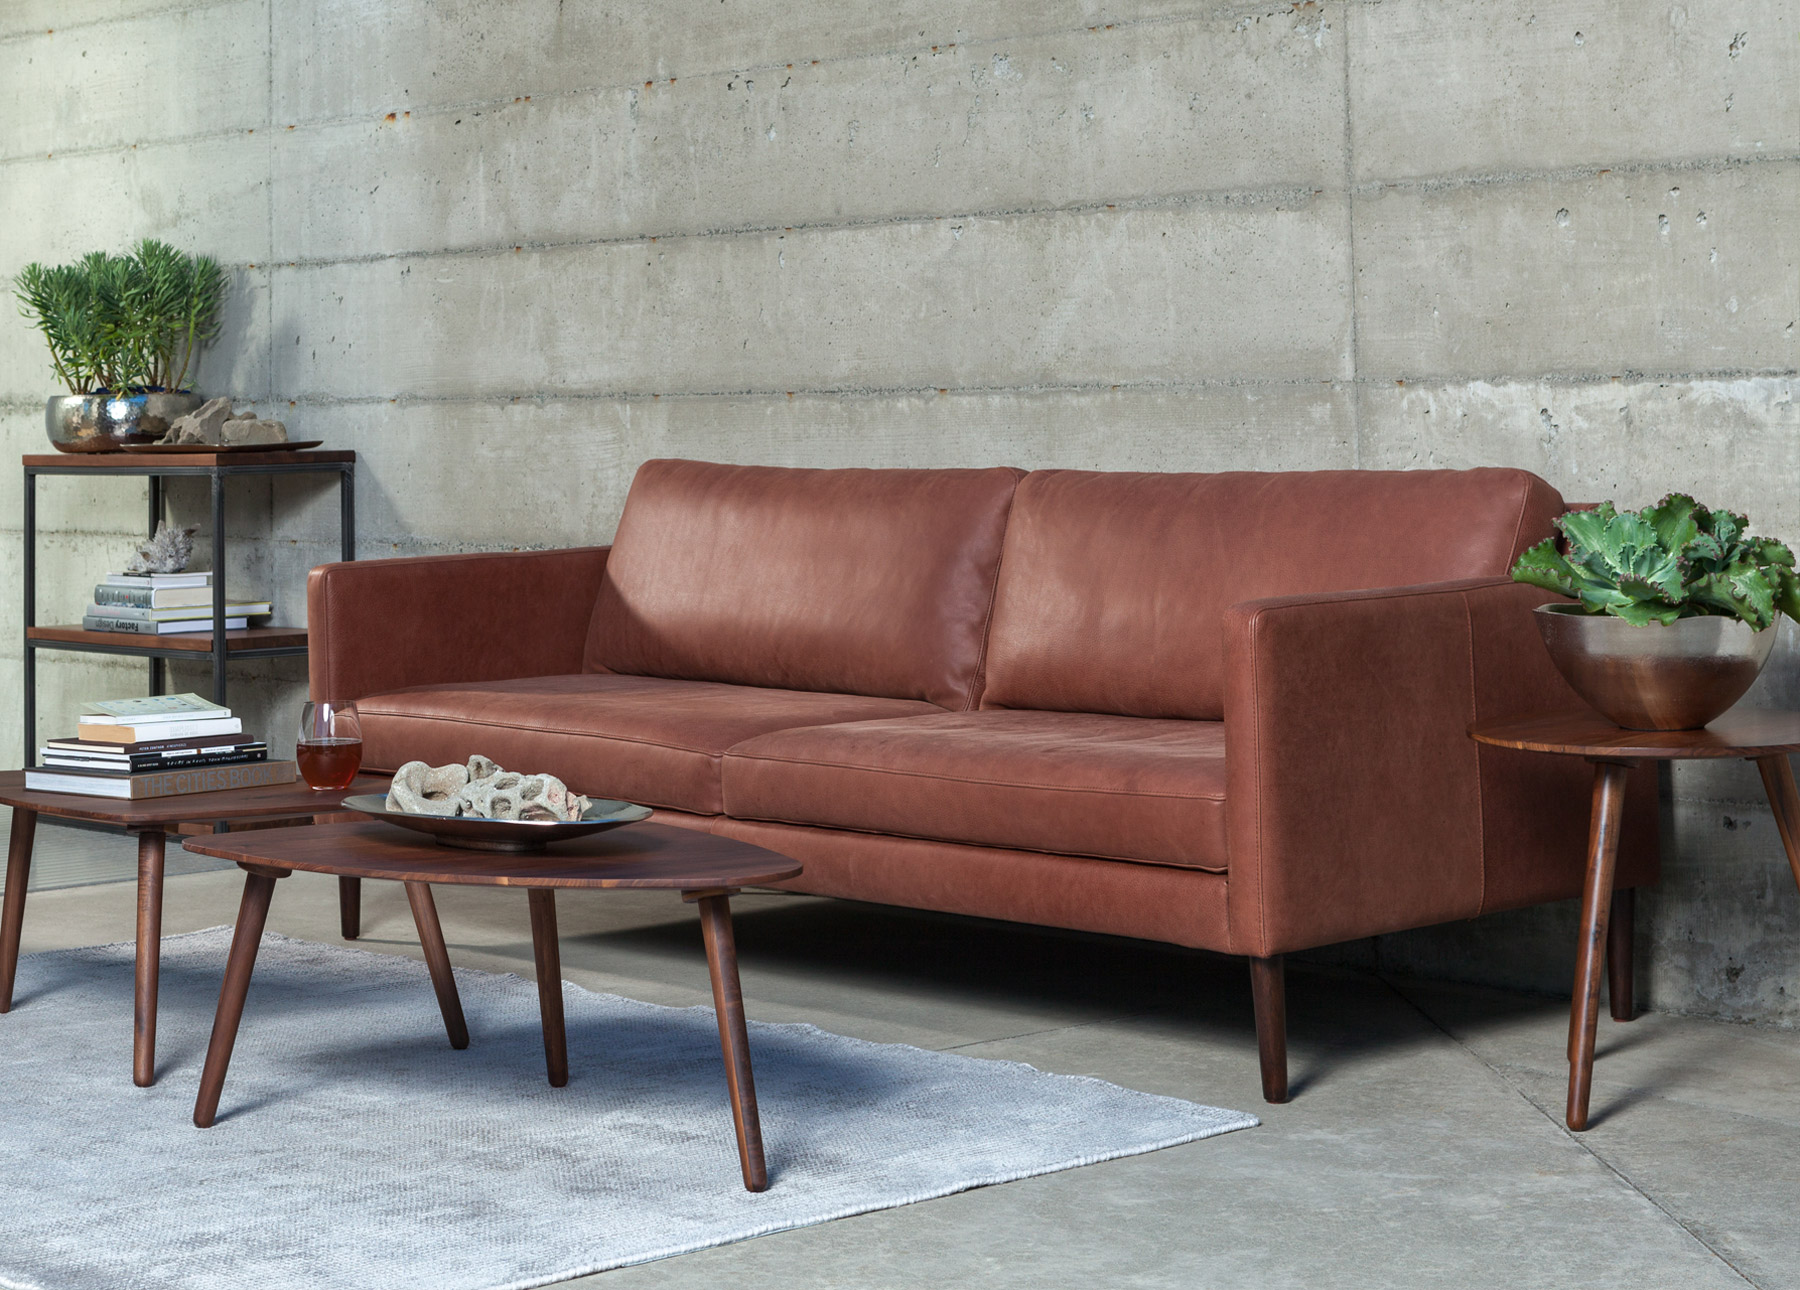 Echo Primo Sedona Brown Sofa with rug, coffee tables, and side table